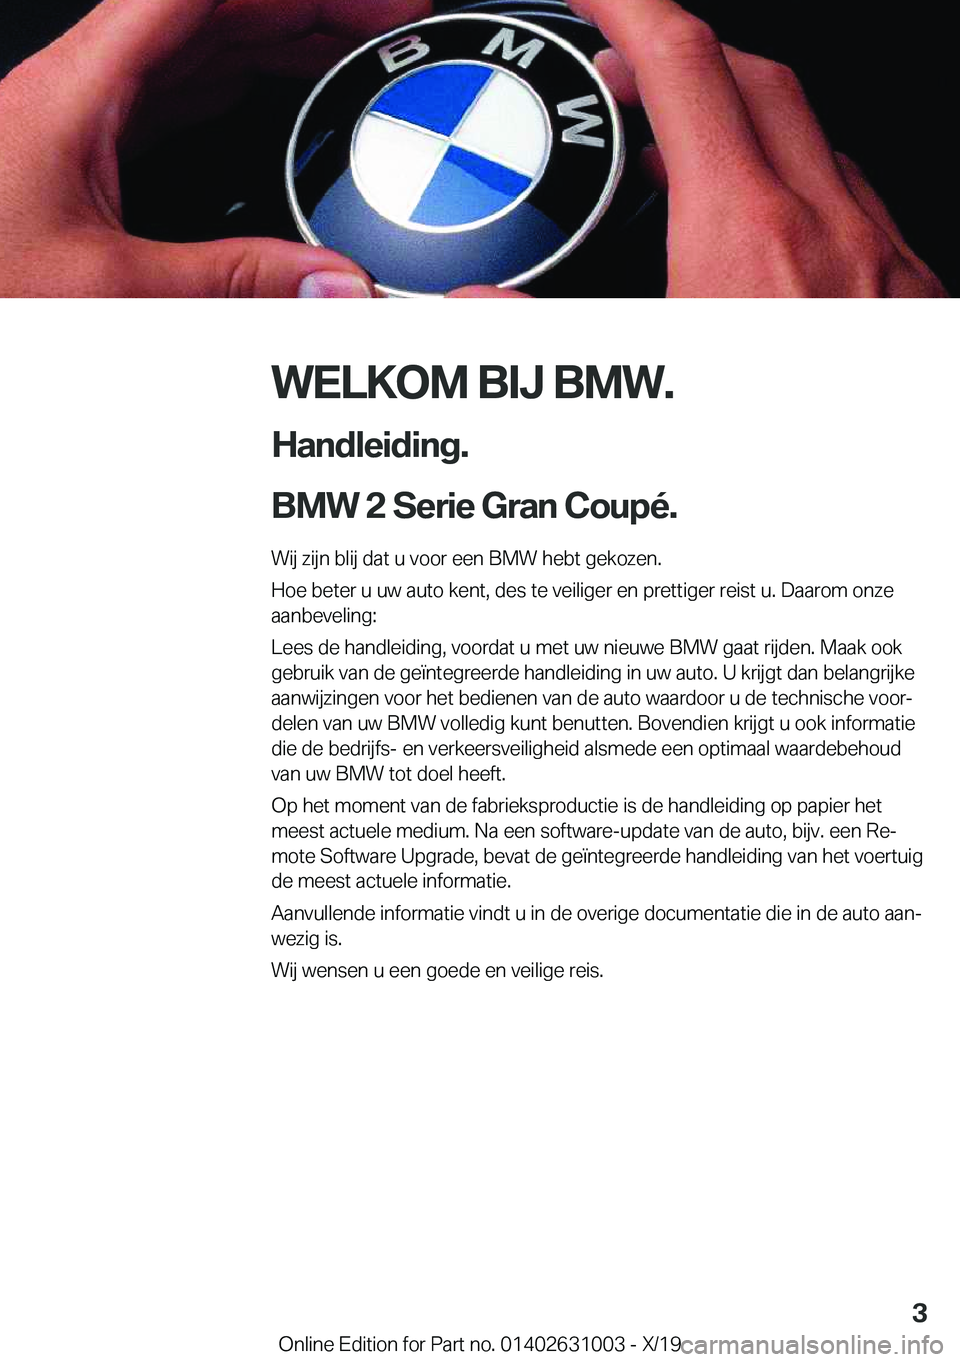 BMW 2 SERIES GRAN COUPE 2020  Instructieboekjes (in Dutch) �W�E�L�K�O�M��B�I�J��B�M�W�.
�H�a�n�d�l�e�i�d�i�n�g�.
�B�M�W��2��S�e�r�i�e��G�r�a�n��C�o�u�p�